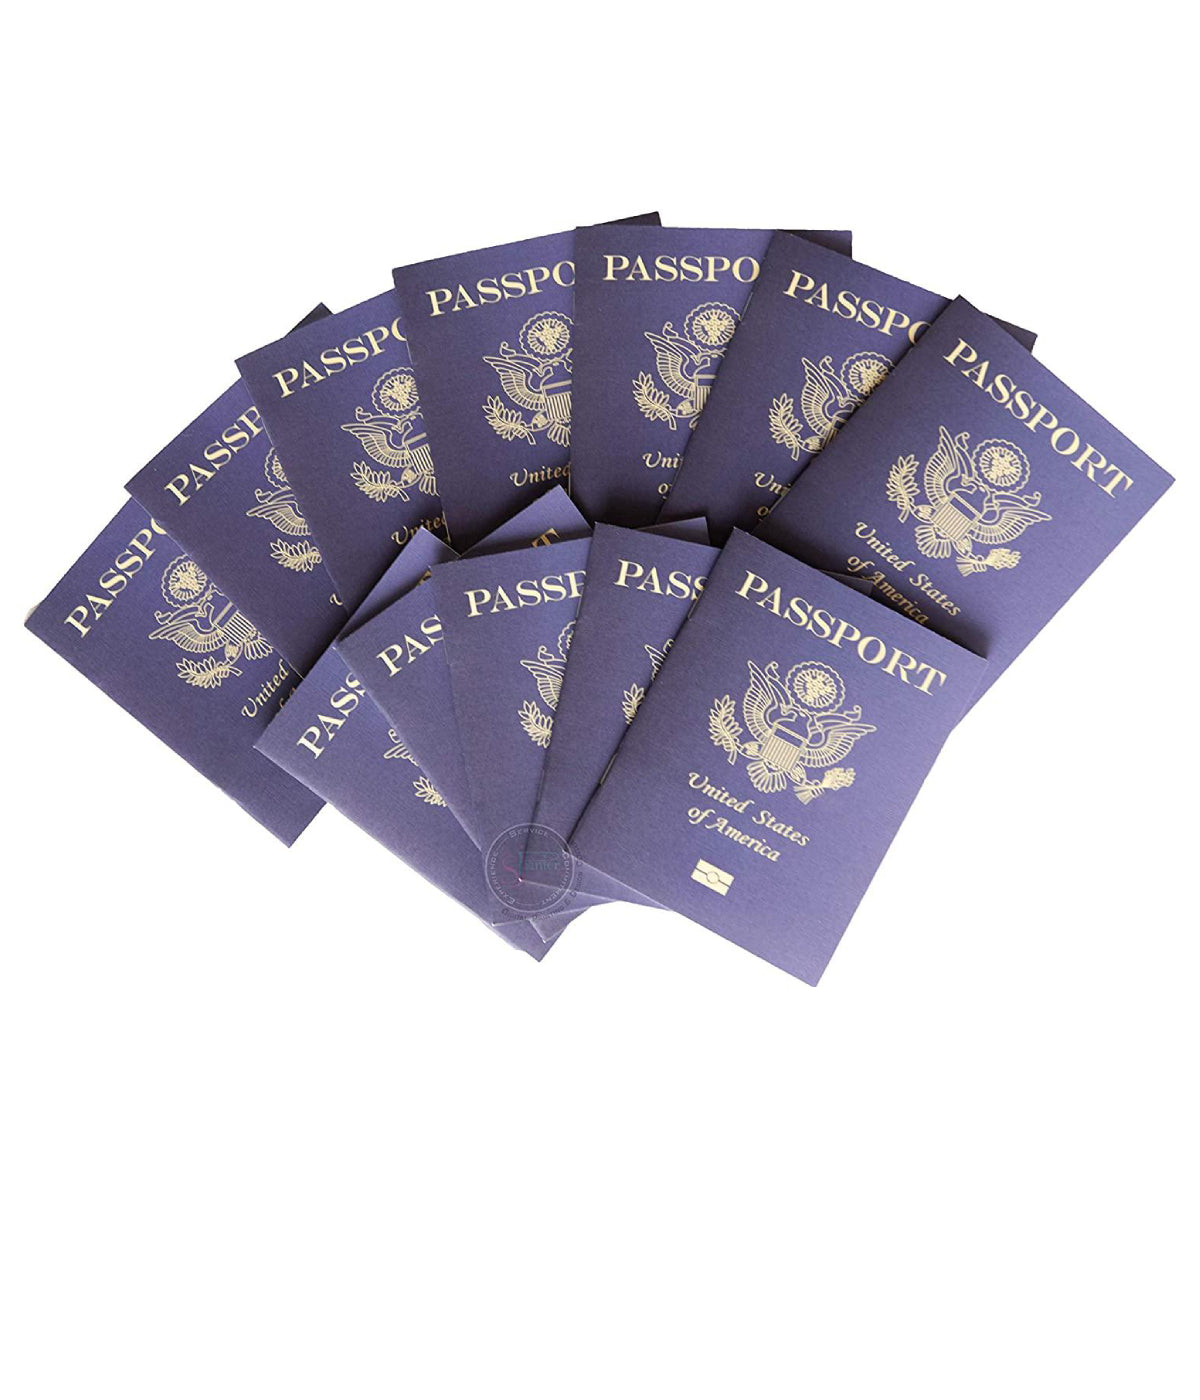 pretend passports